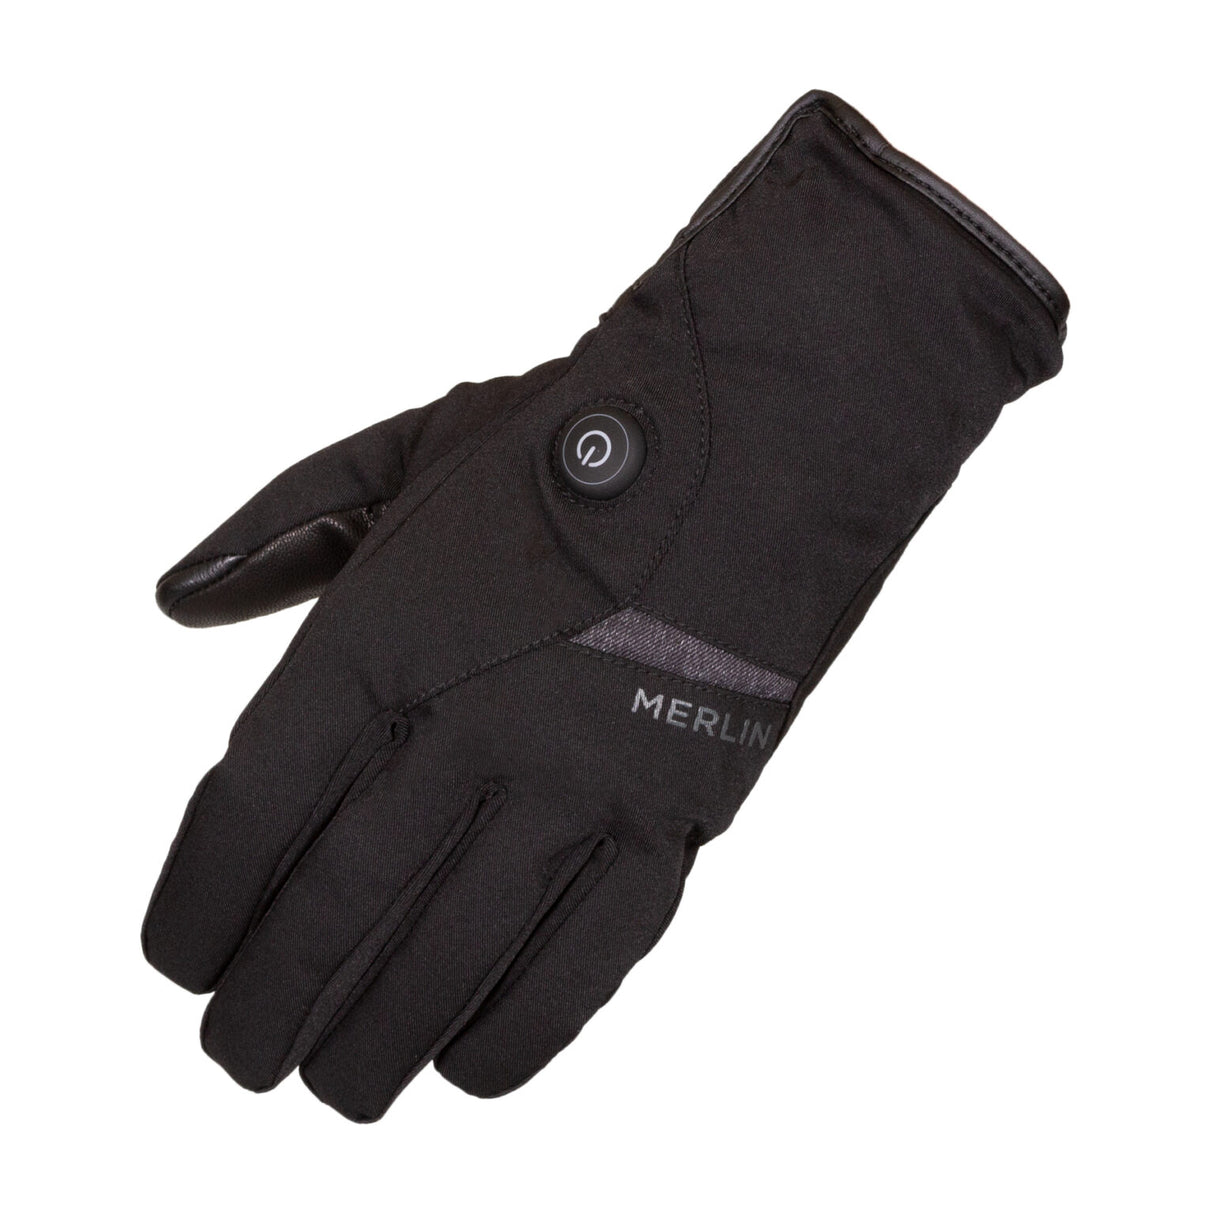 Merlin Finchley Heated Gloves - Black